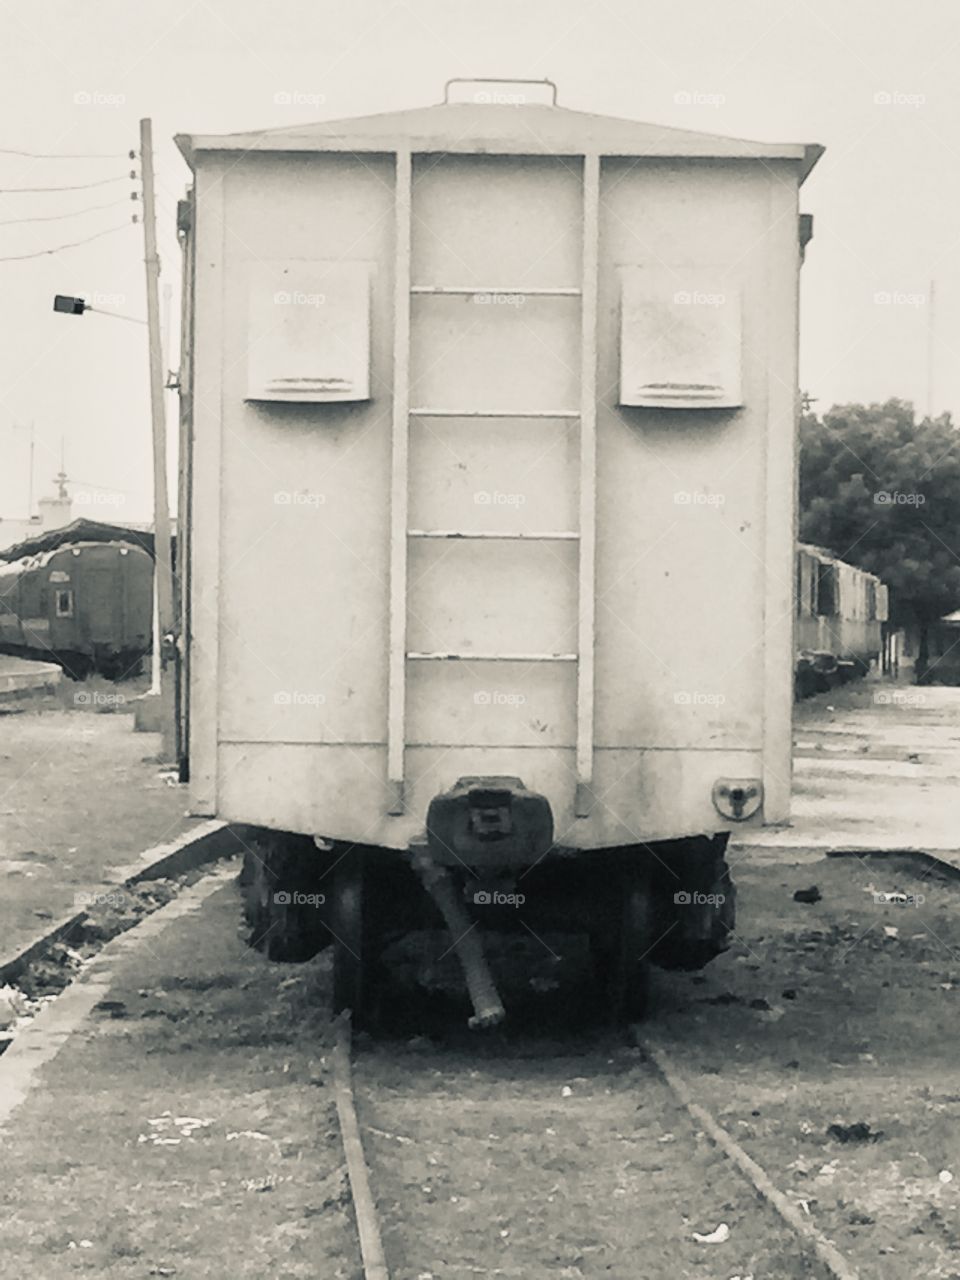 Olaf abandoned train cargo